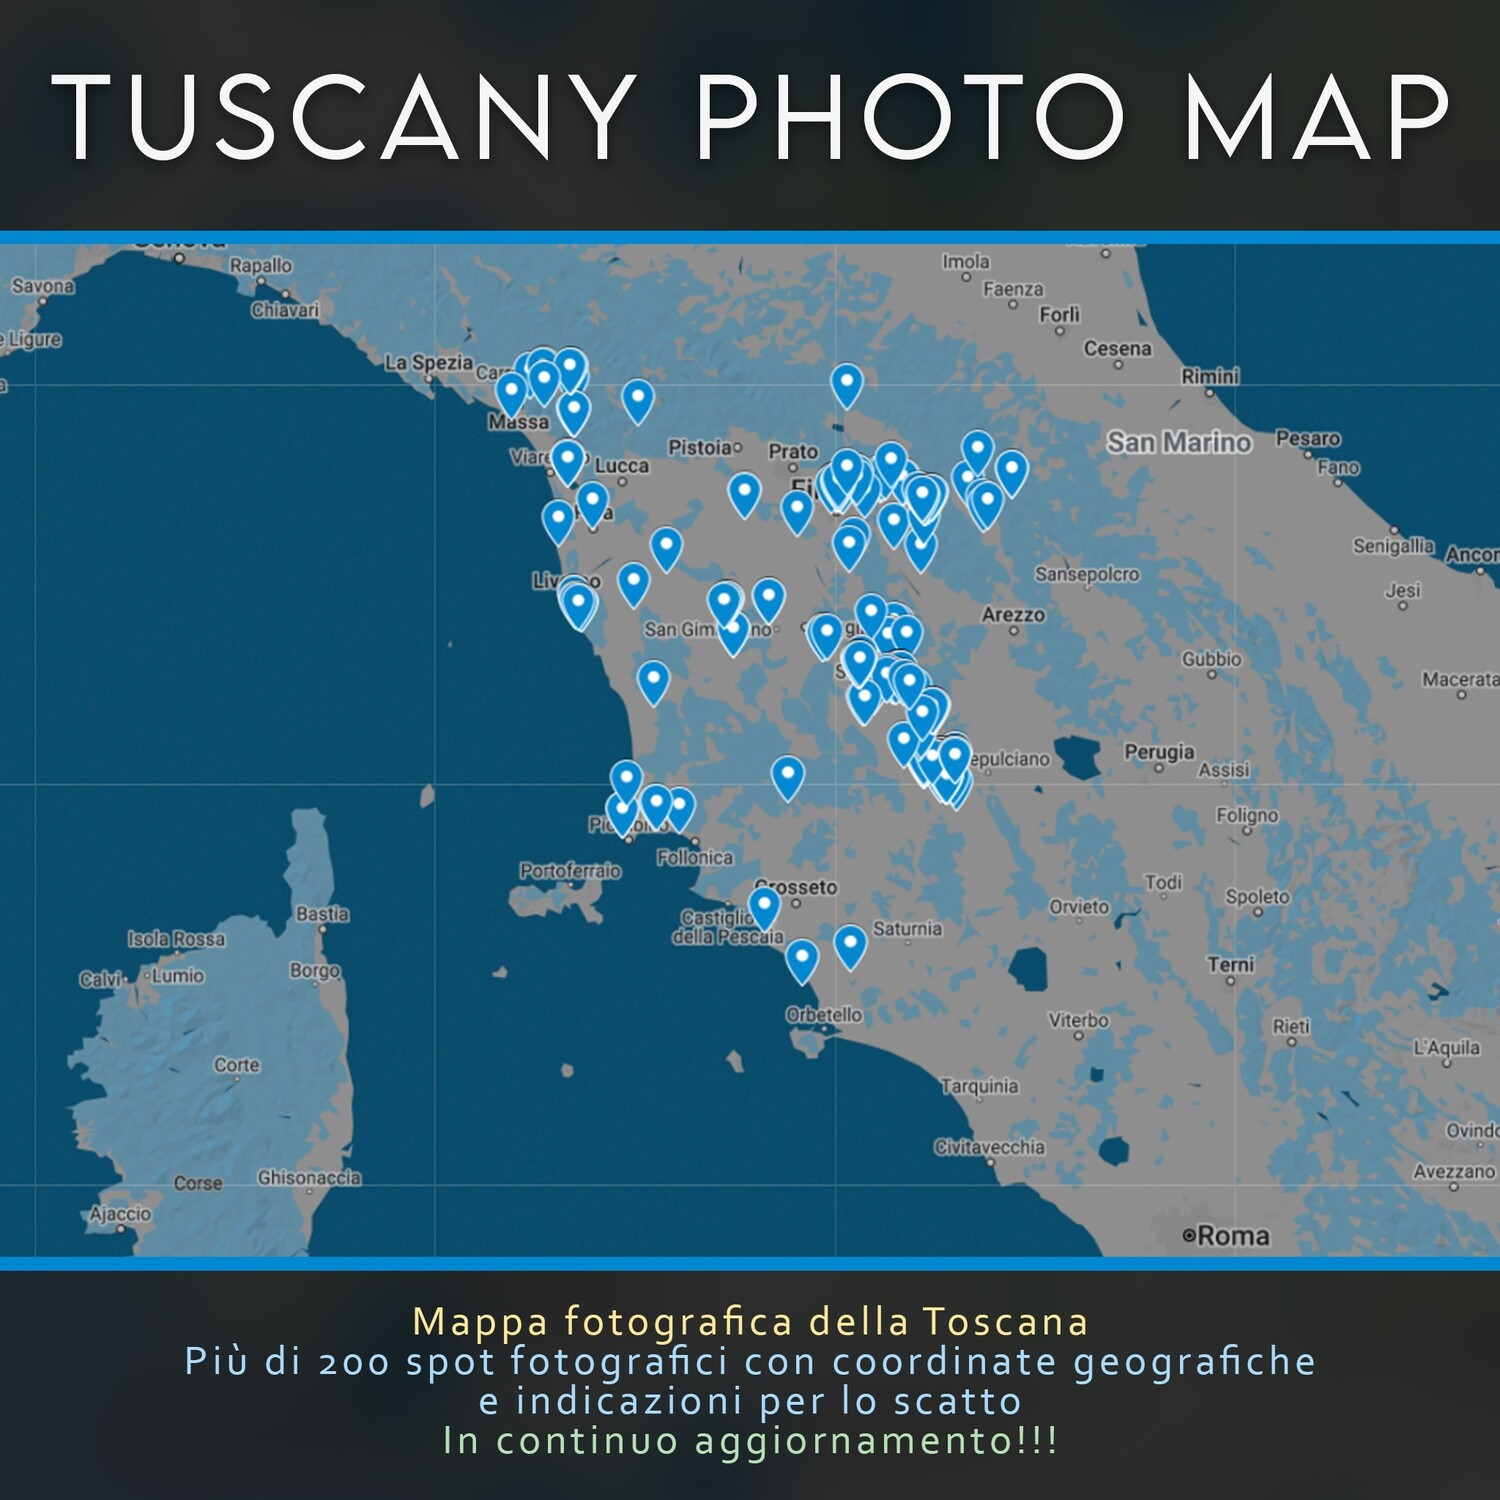 Mappa Fotografica della Toscana | Tuscany Photo Map